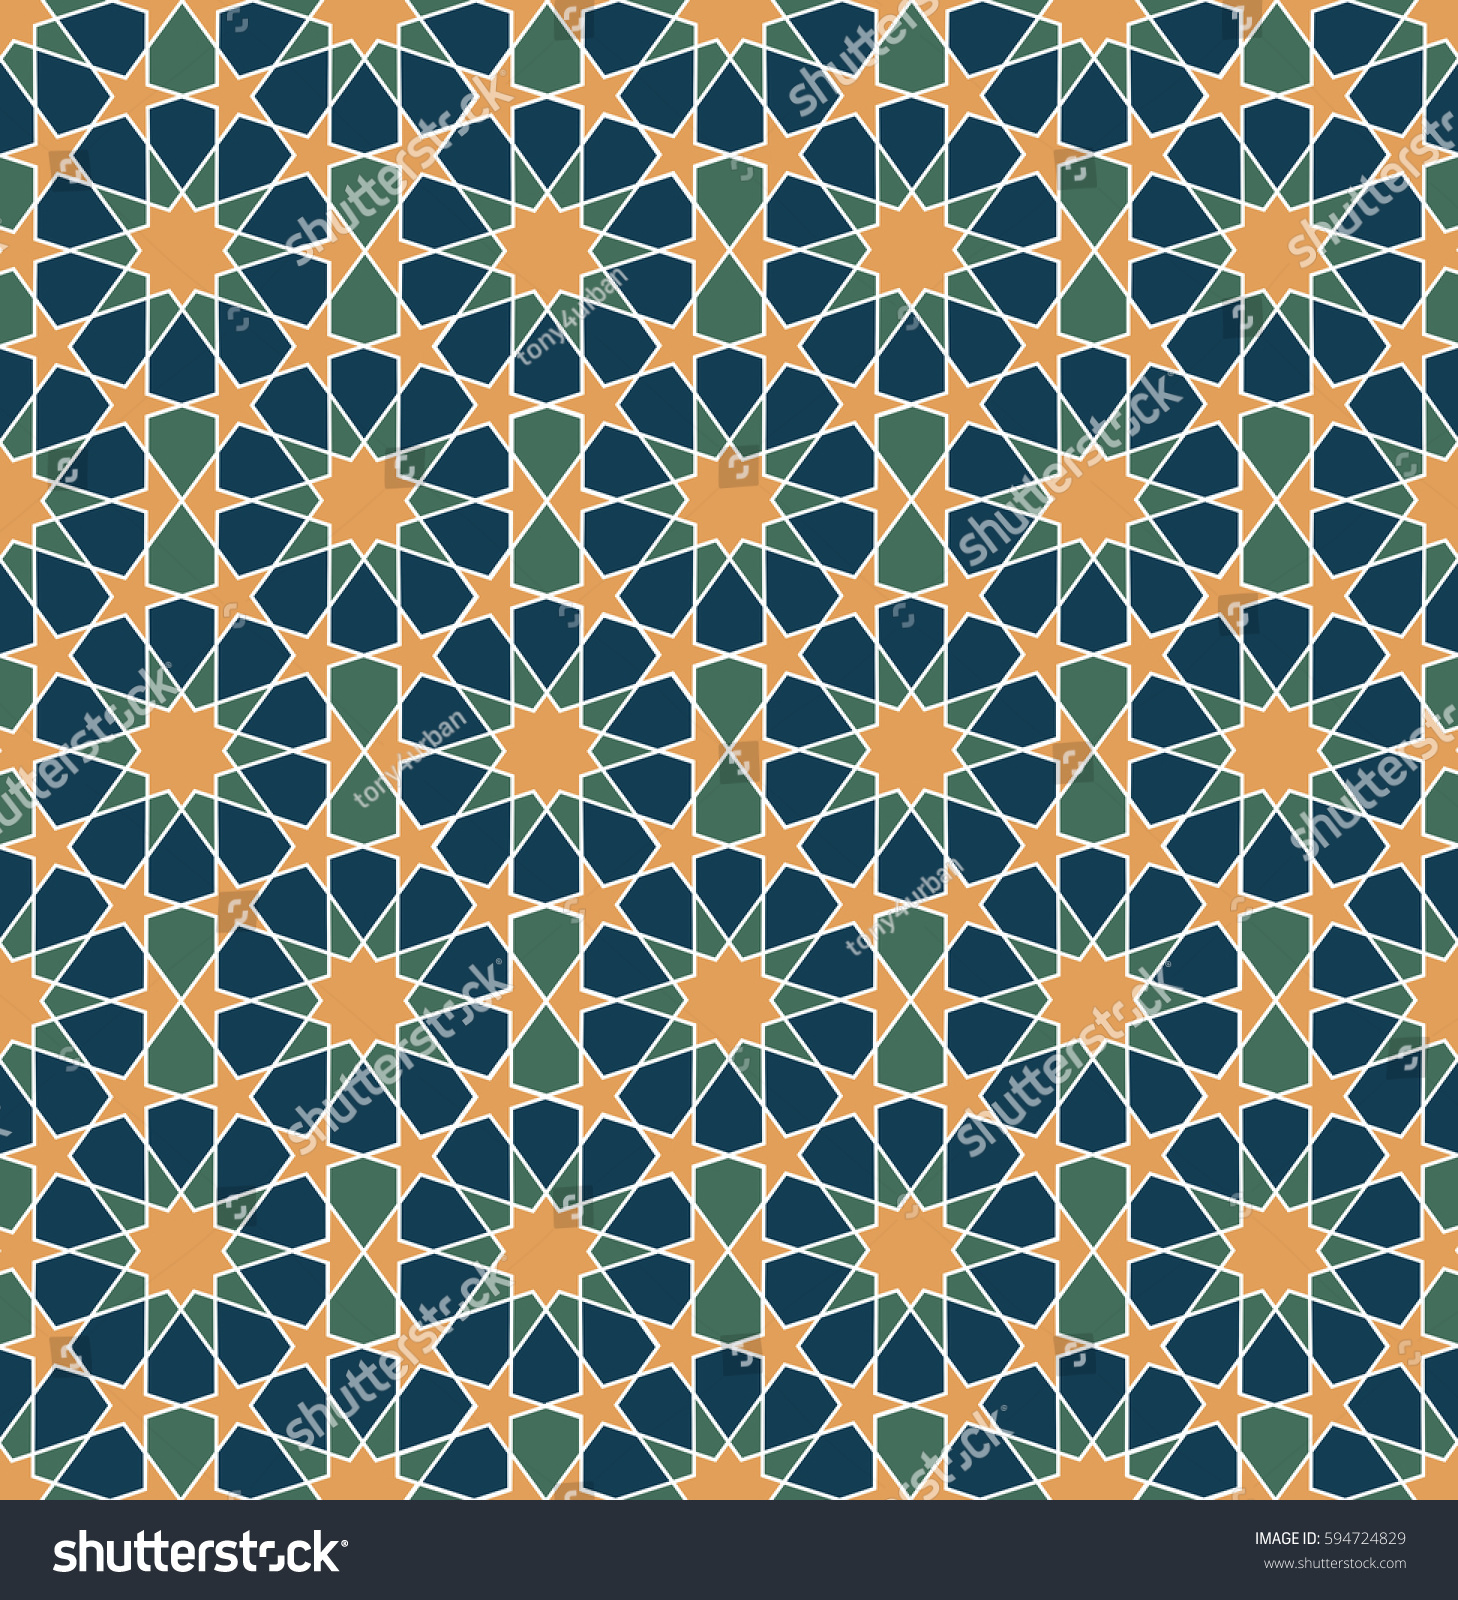 Islamic Religious Geometric Decoration Pattern Background Stock ...